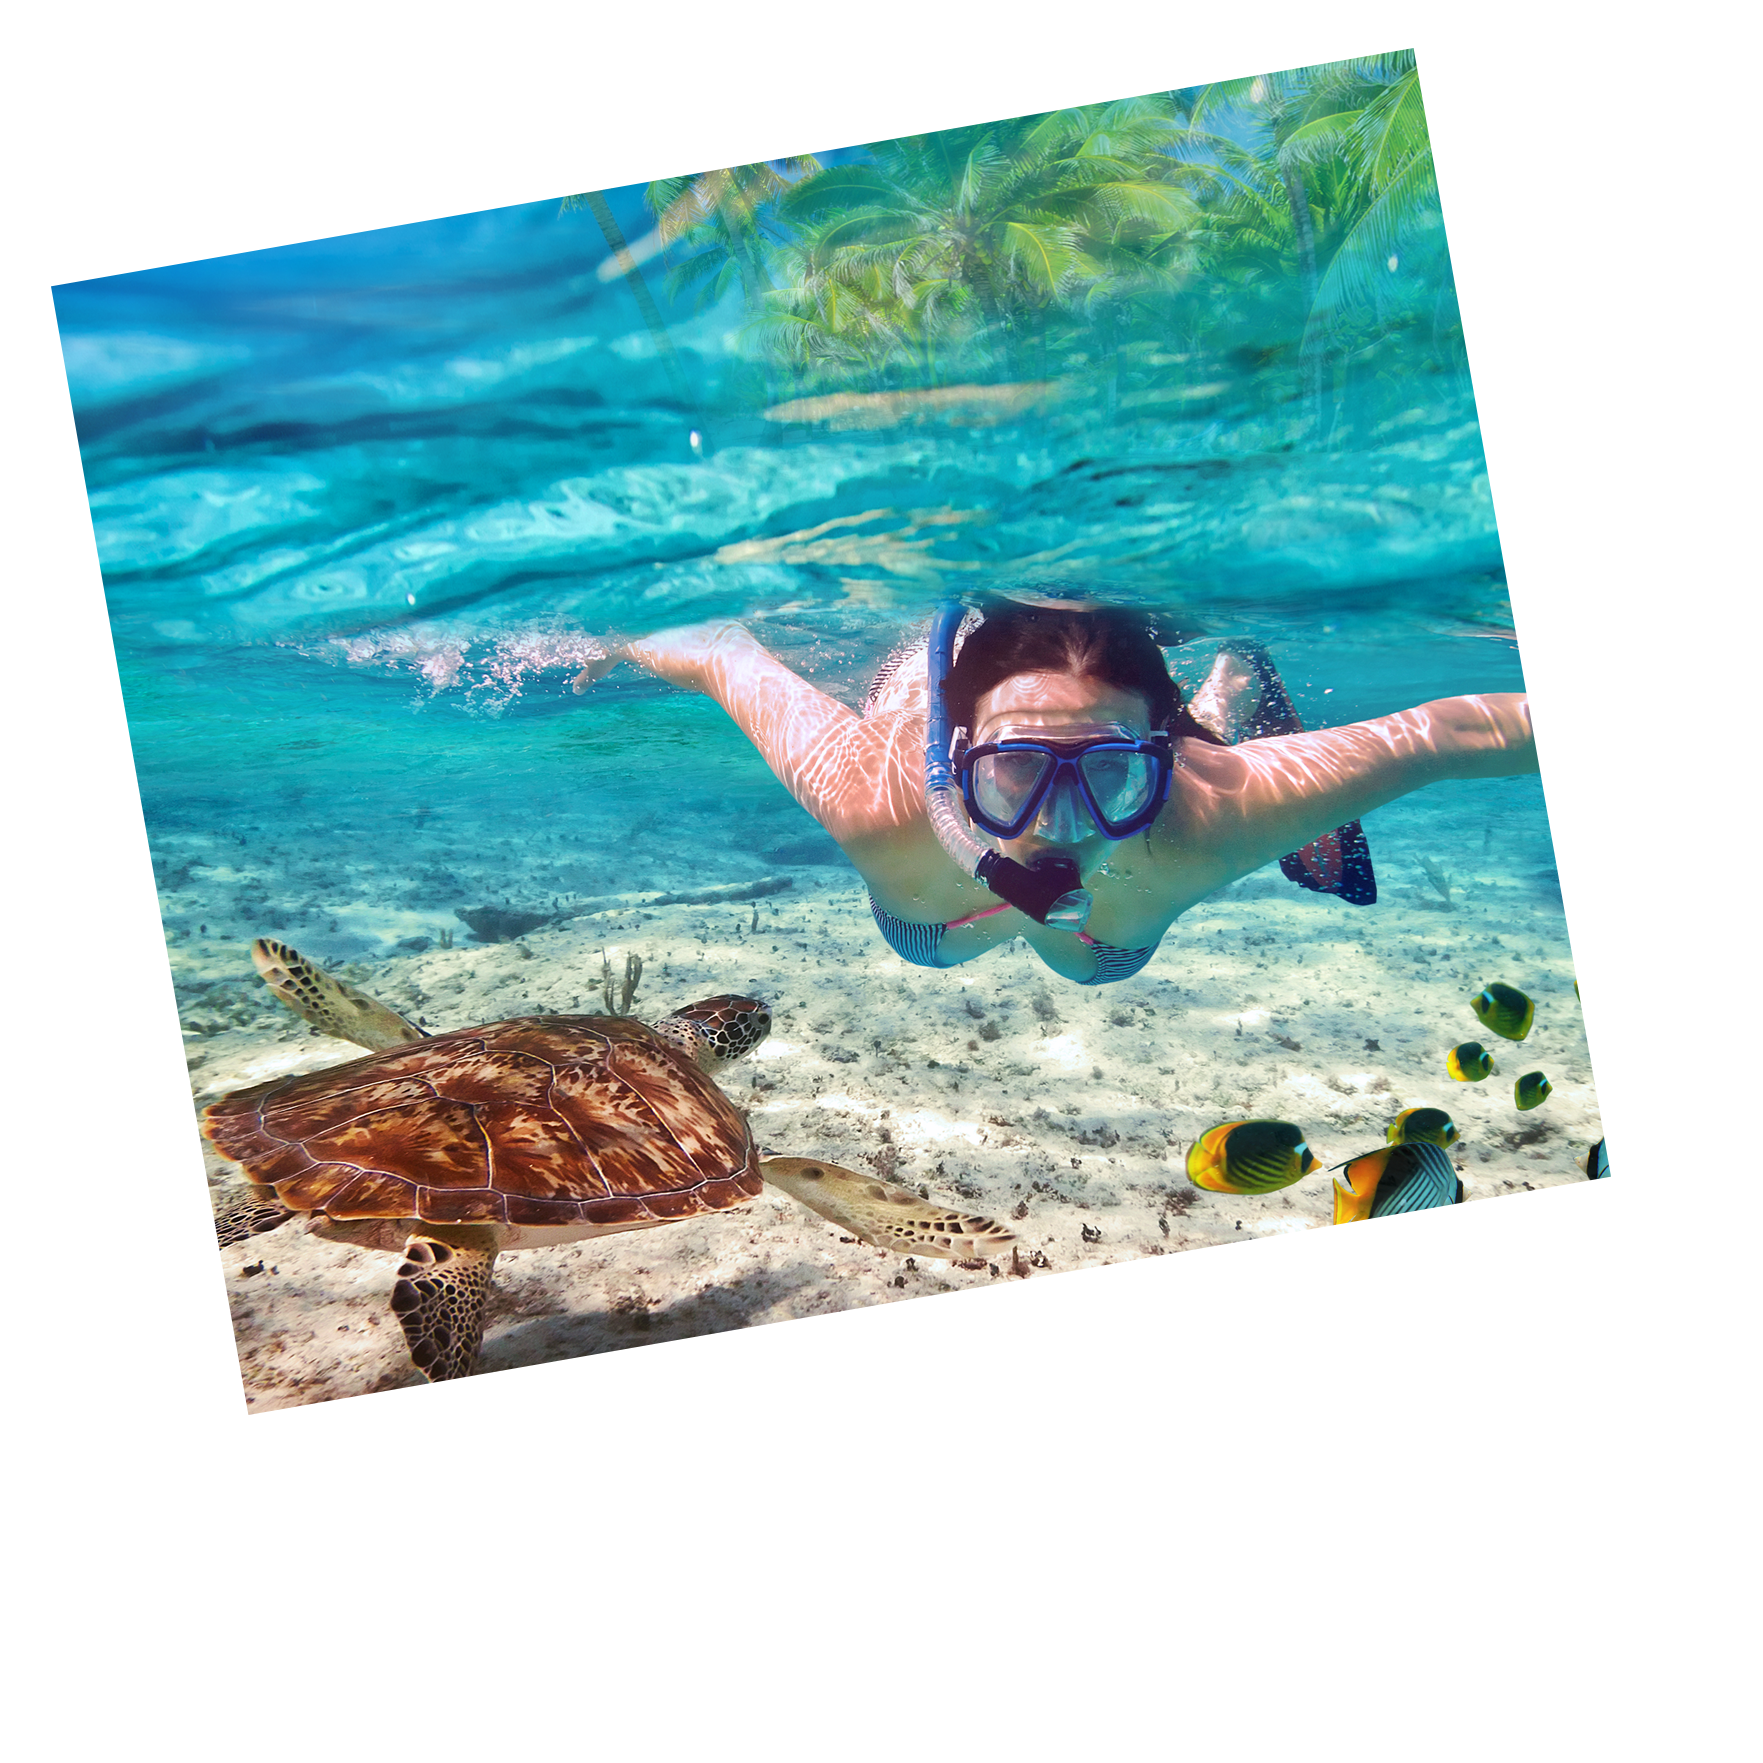 a woman is swimming in the ocean near a turtle in the san blas islands